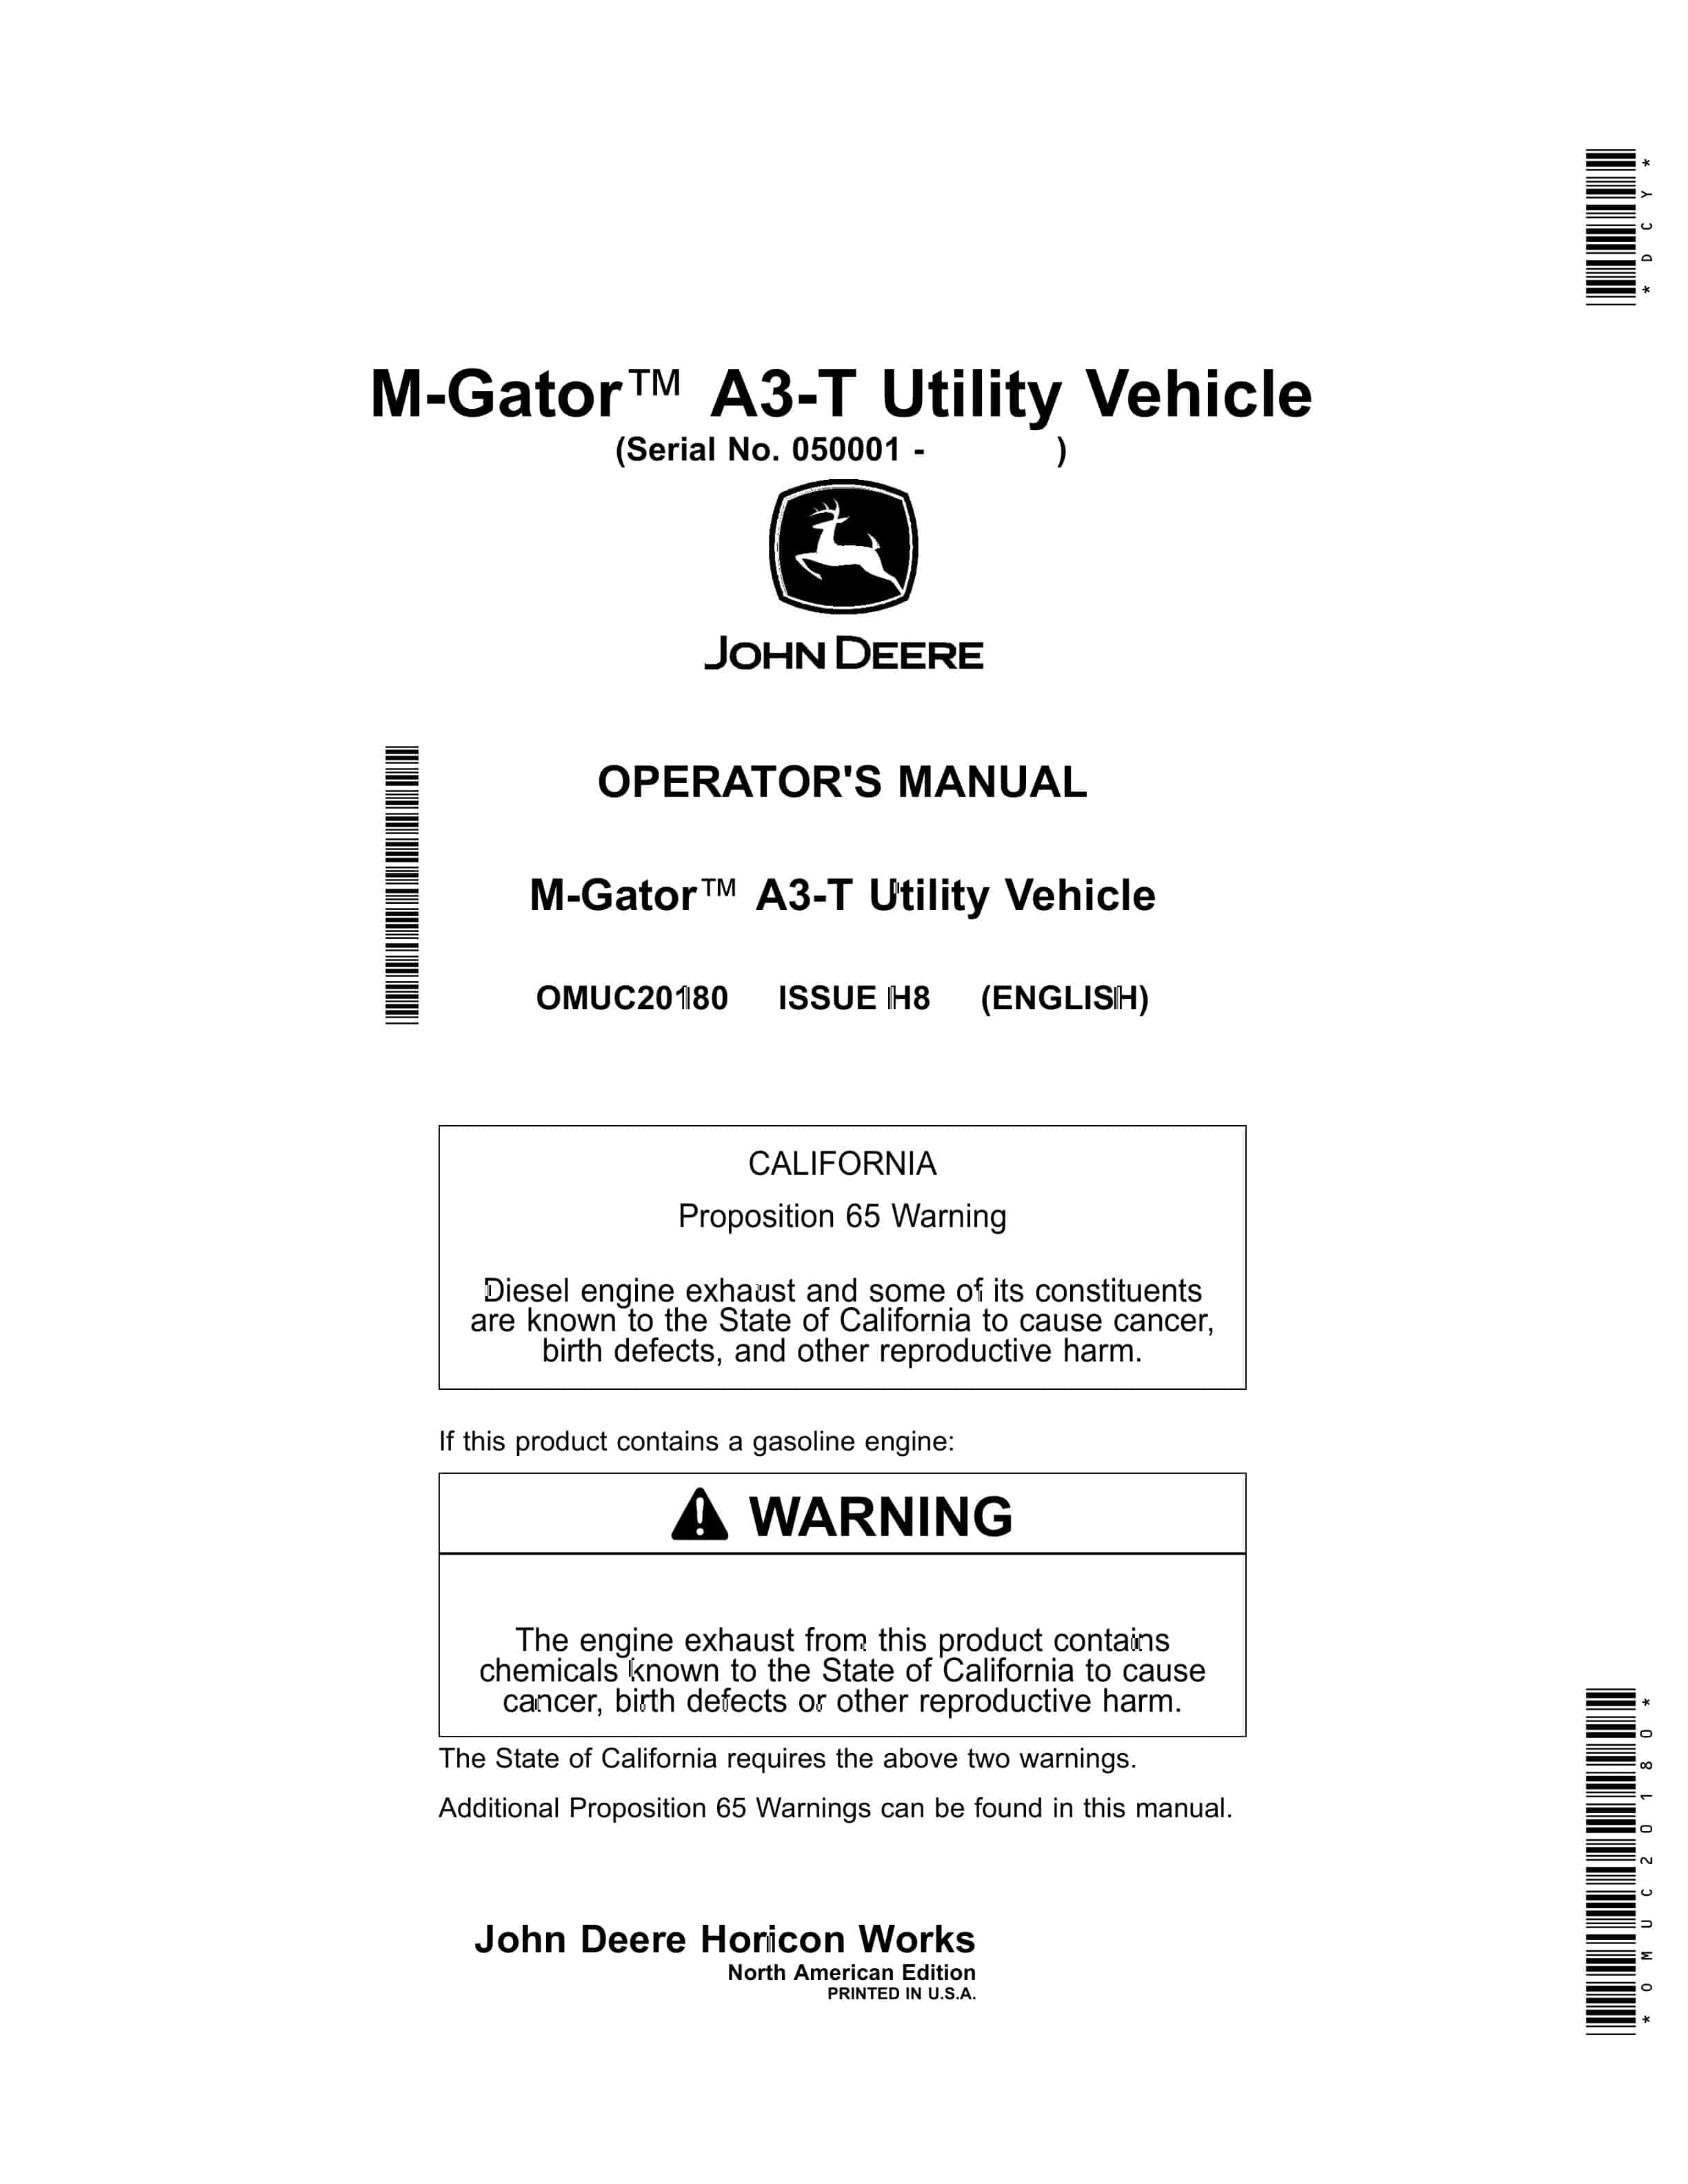 John Deere A3 T M Gator Utility Vehicles Operator Manual OMUC20180 1